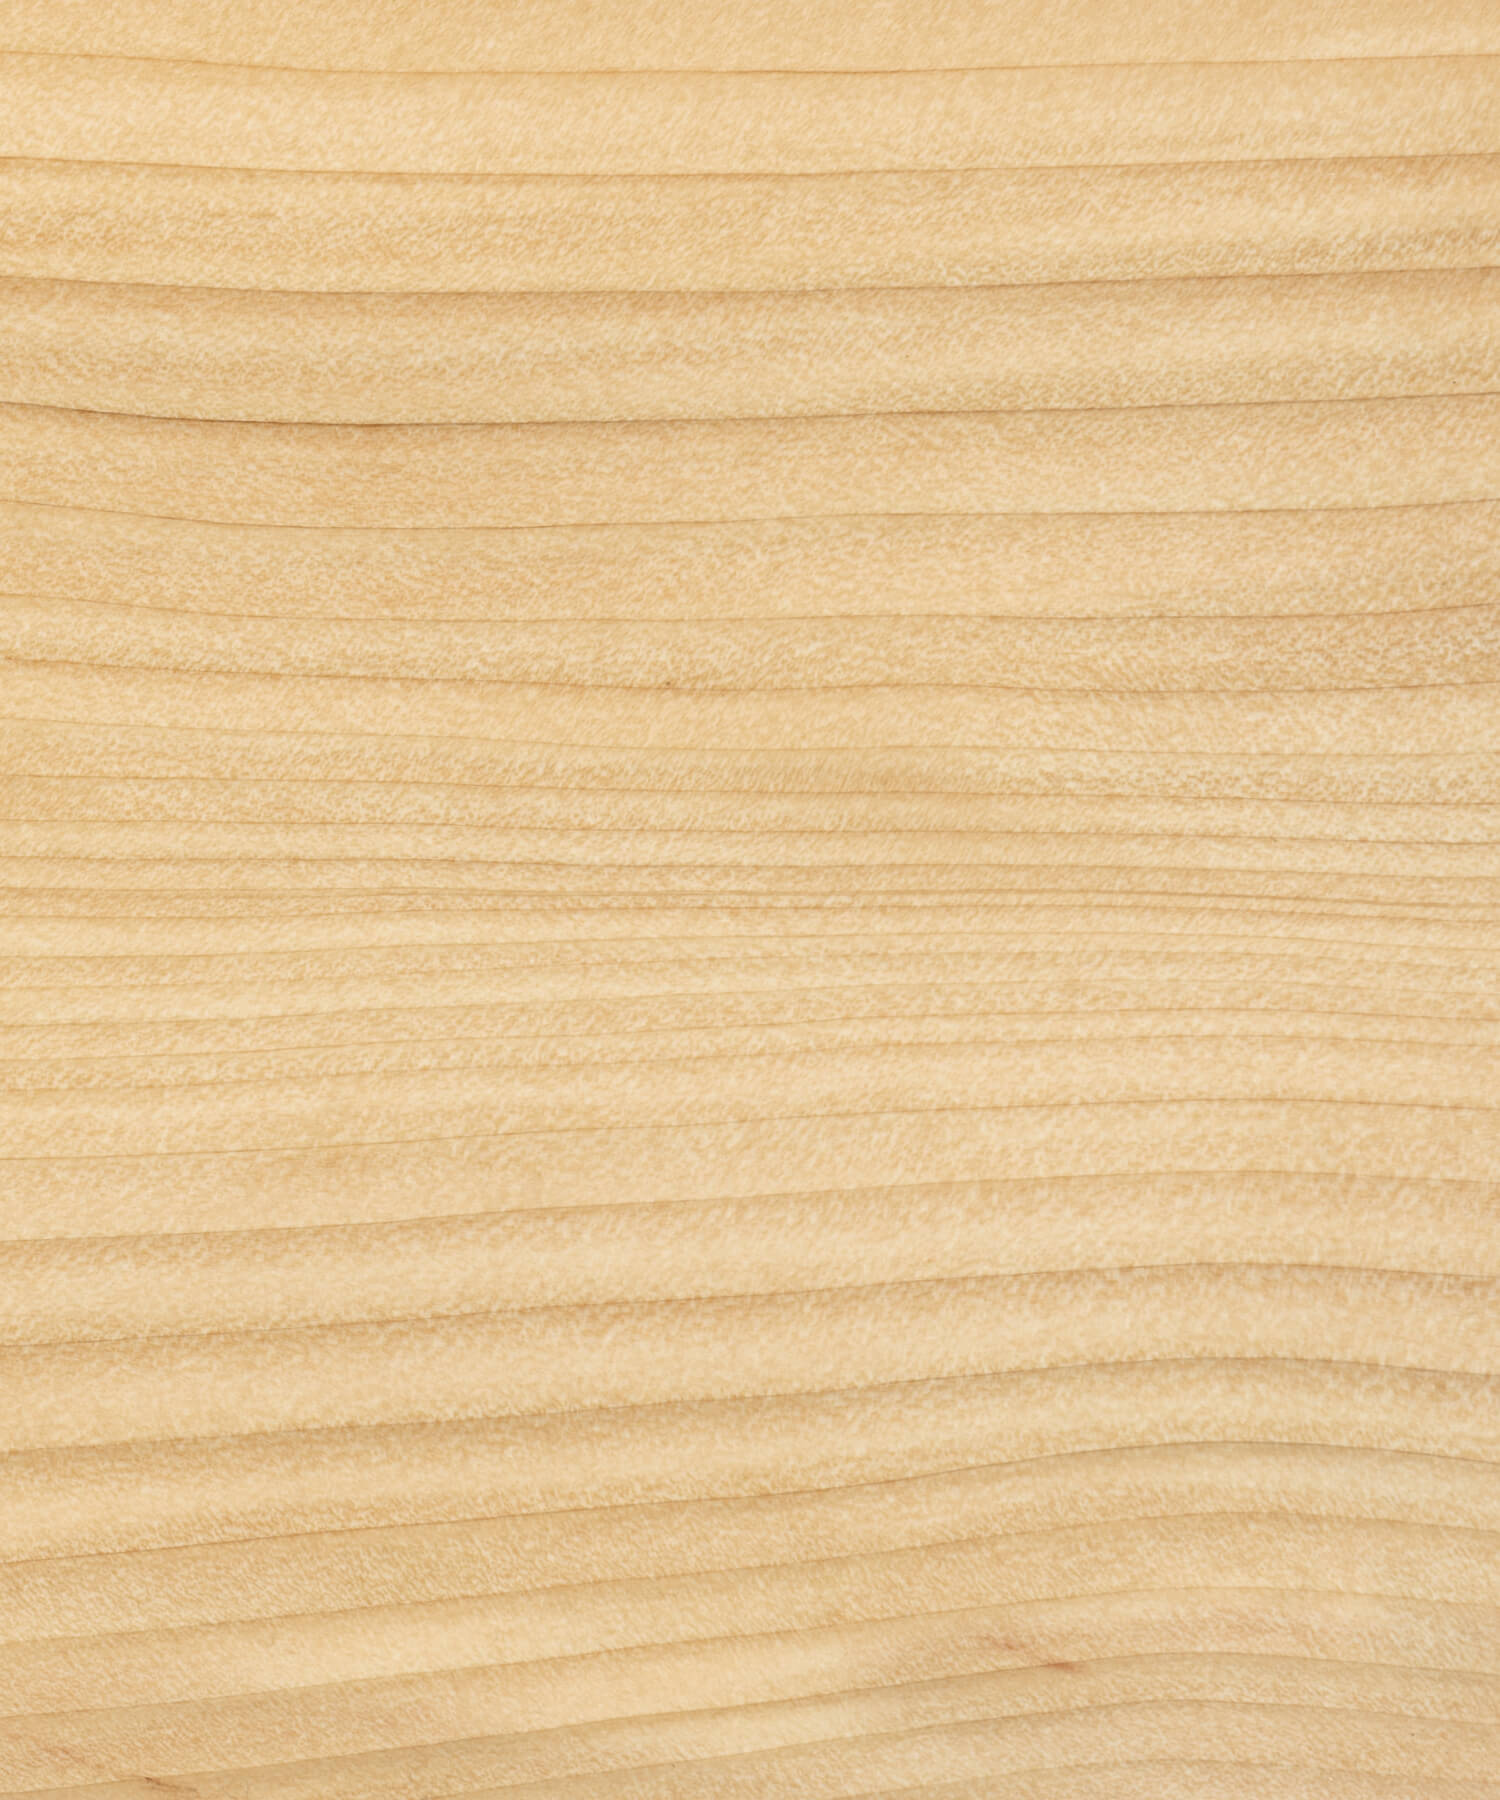 Unoiled cedar of Lebanon timber grain close up